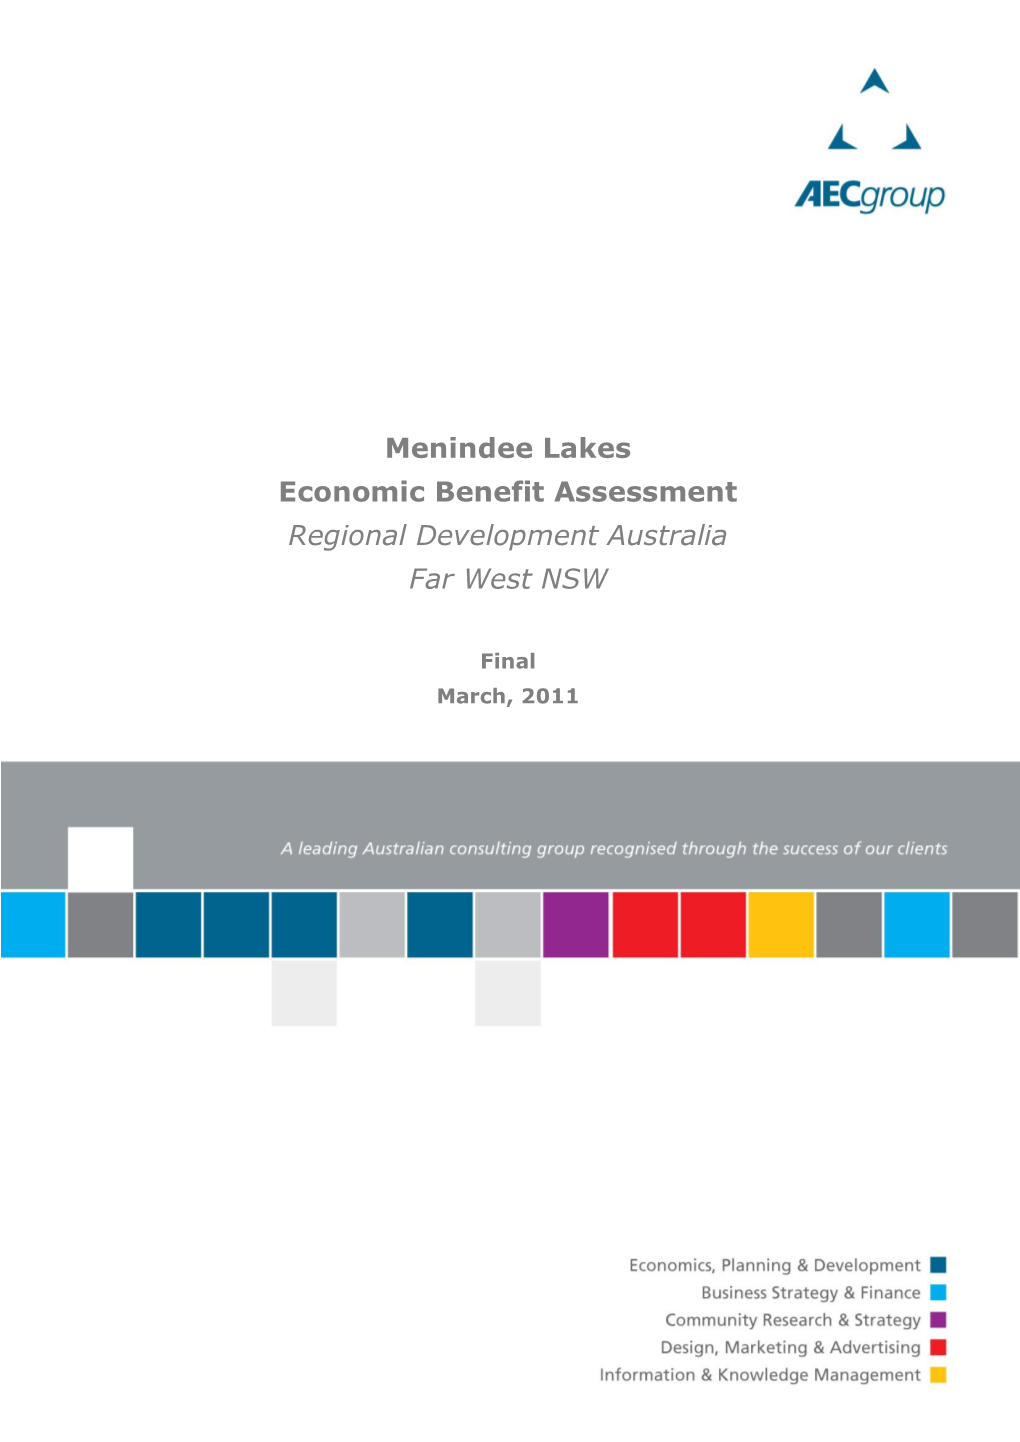 Menindee Lakes Economic Benefit Assessment Regional Development Australia Far West NSW